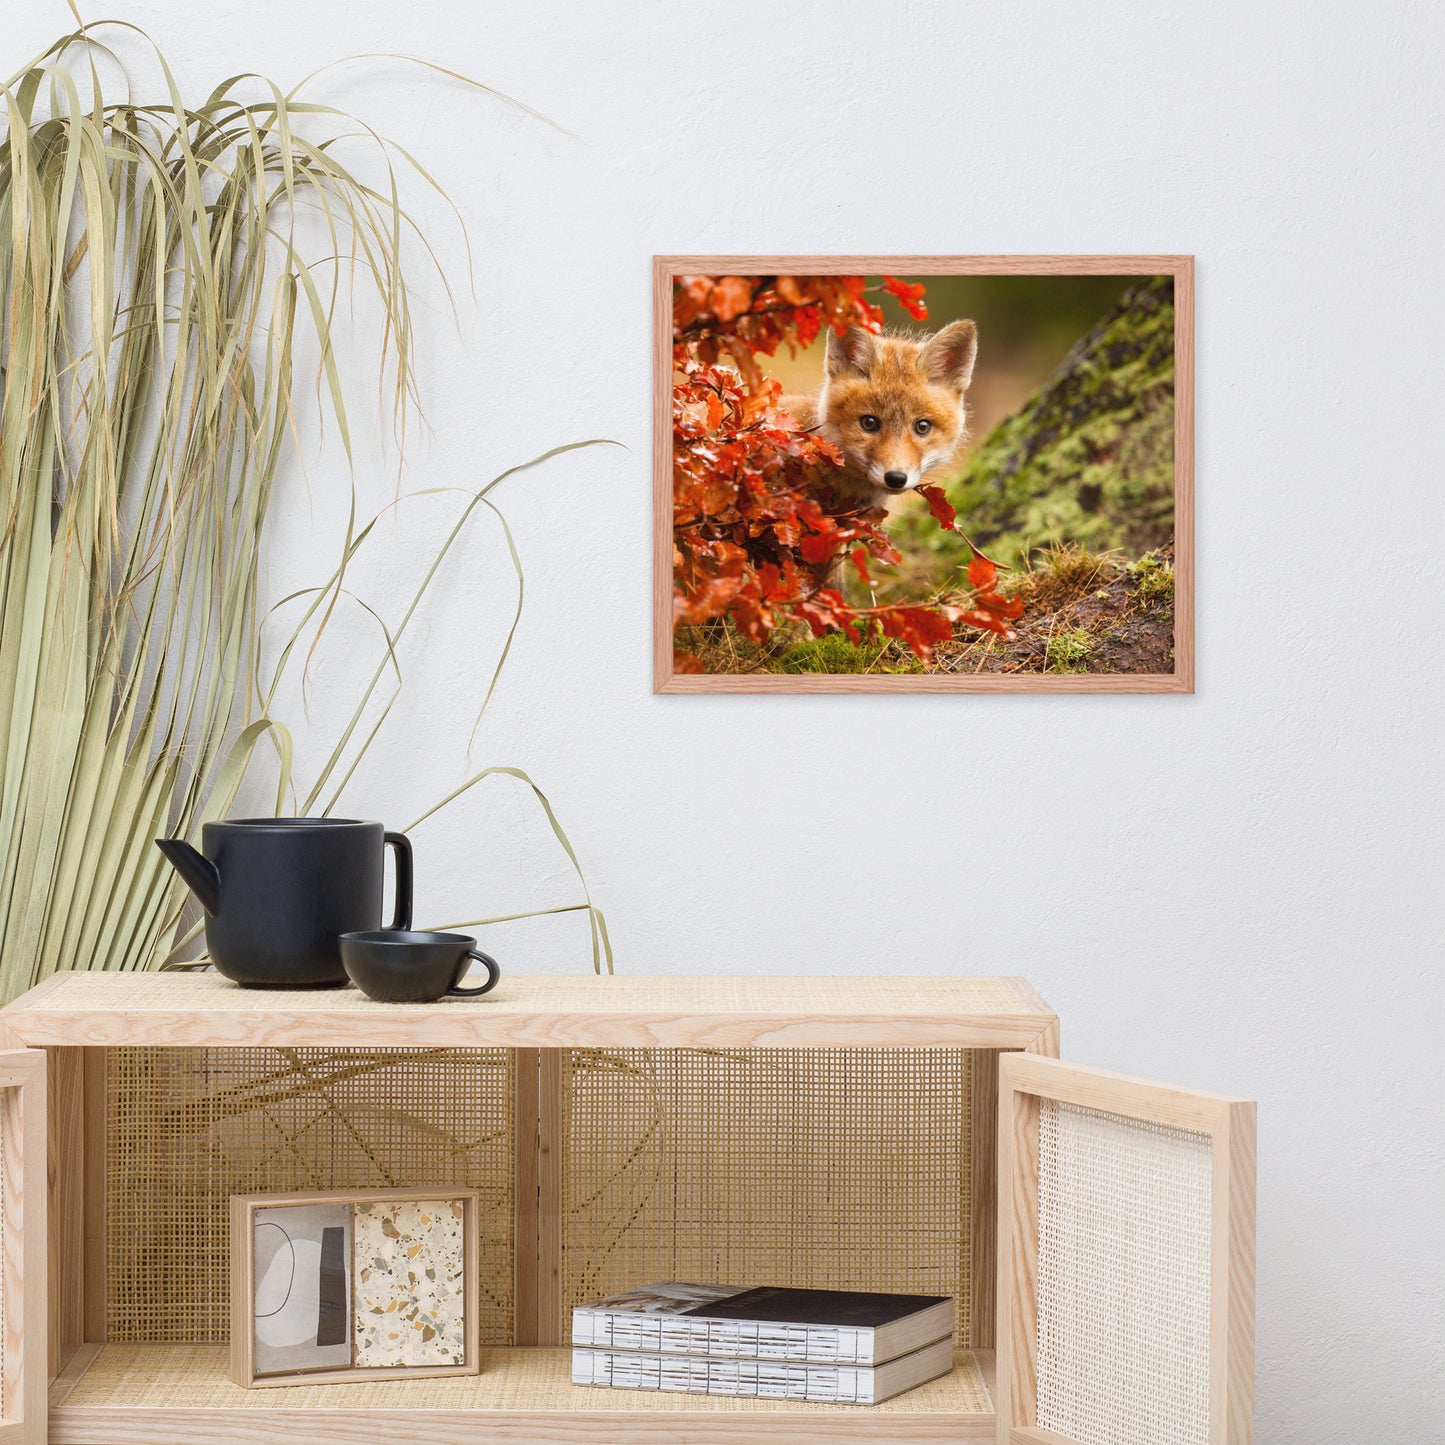 Framed Animal Prints For Nursery: Peek-A-Boo Baby Fox Pup And Fall Leaves - Animal / Wildlife / Nature Artwork - Wall Decor - Framed Wall Art Print